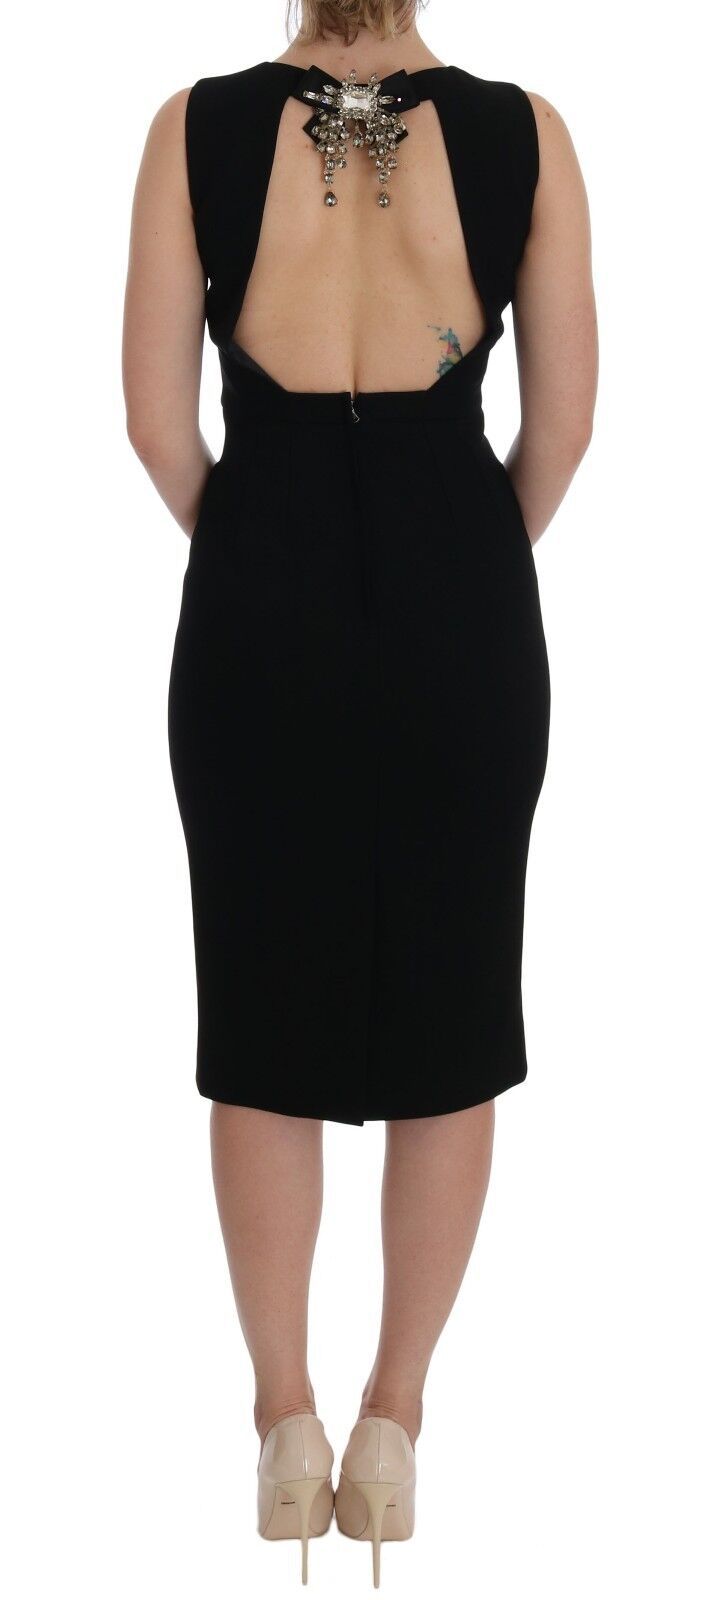 Dolce & Gabbana Elegant Crystal Sheath Knee-Length Dress